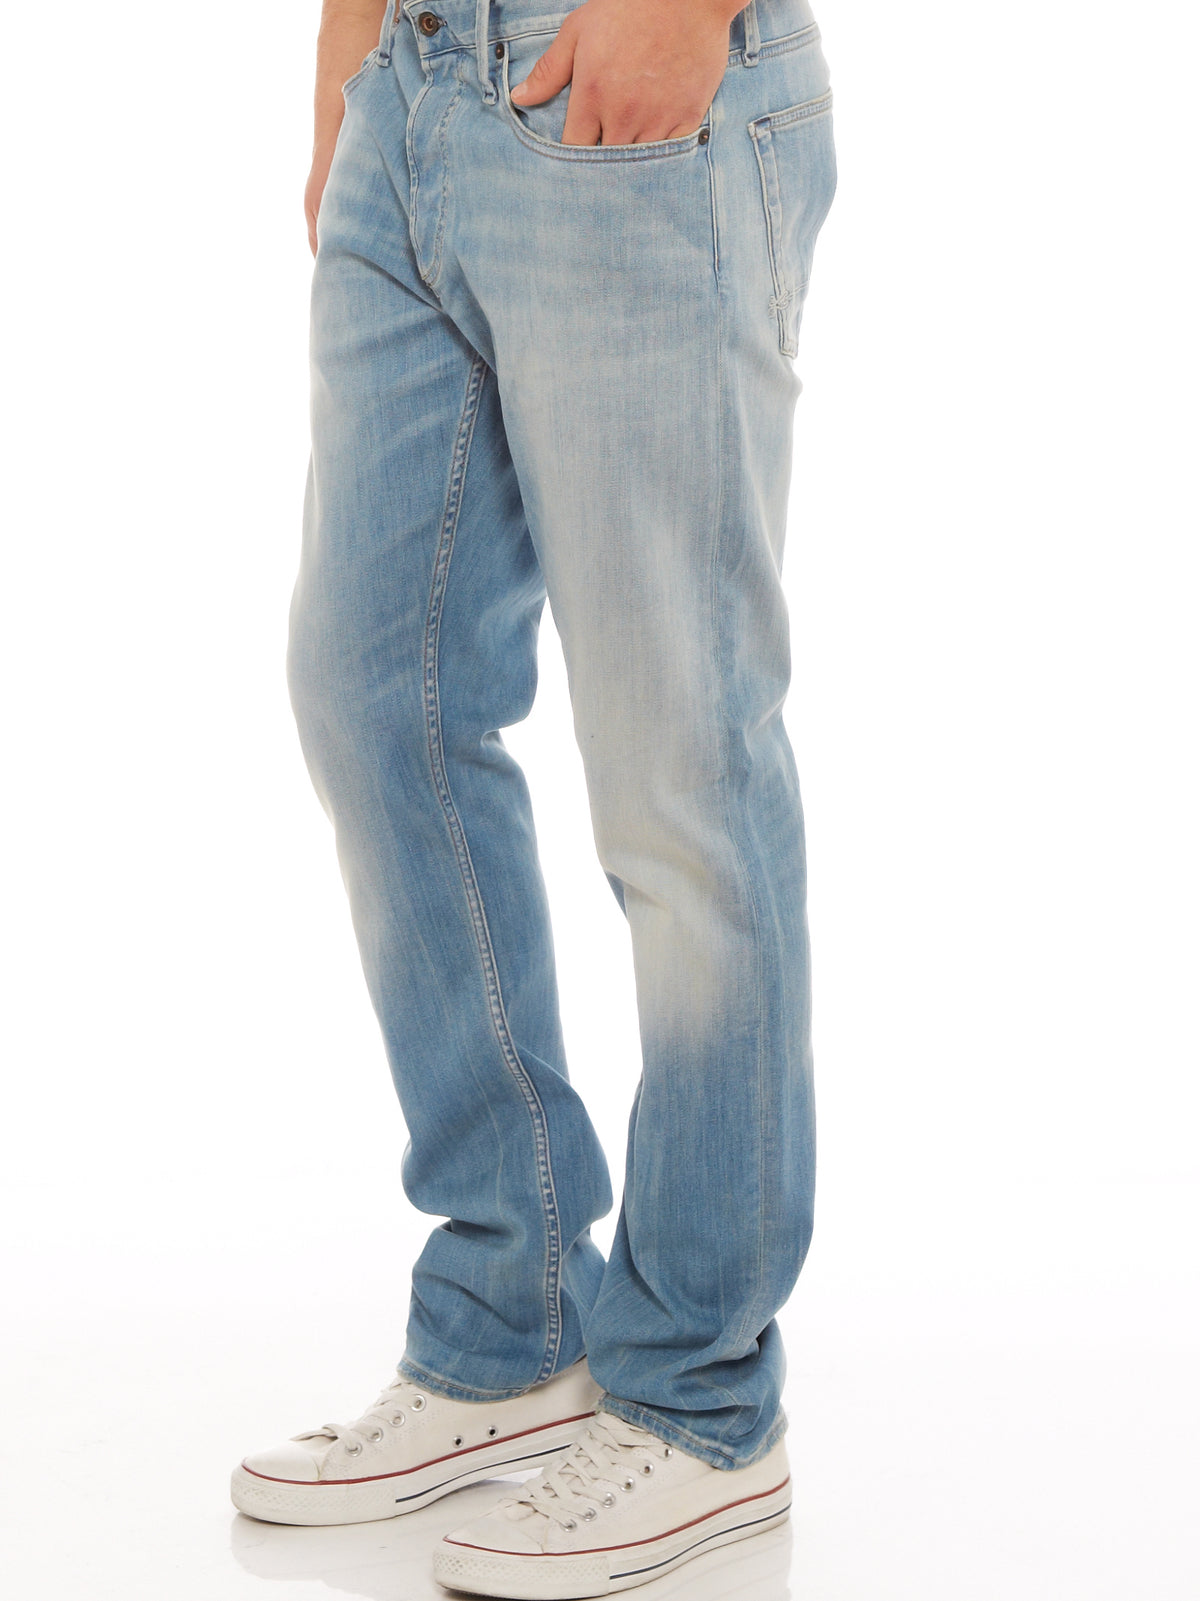 Razor Jeans in HSS Faded Blue Denim